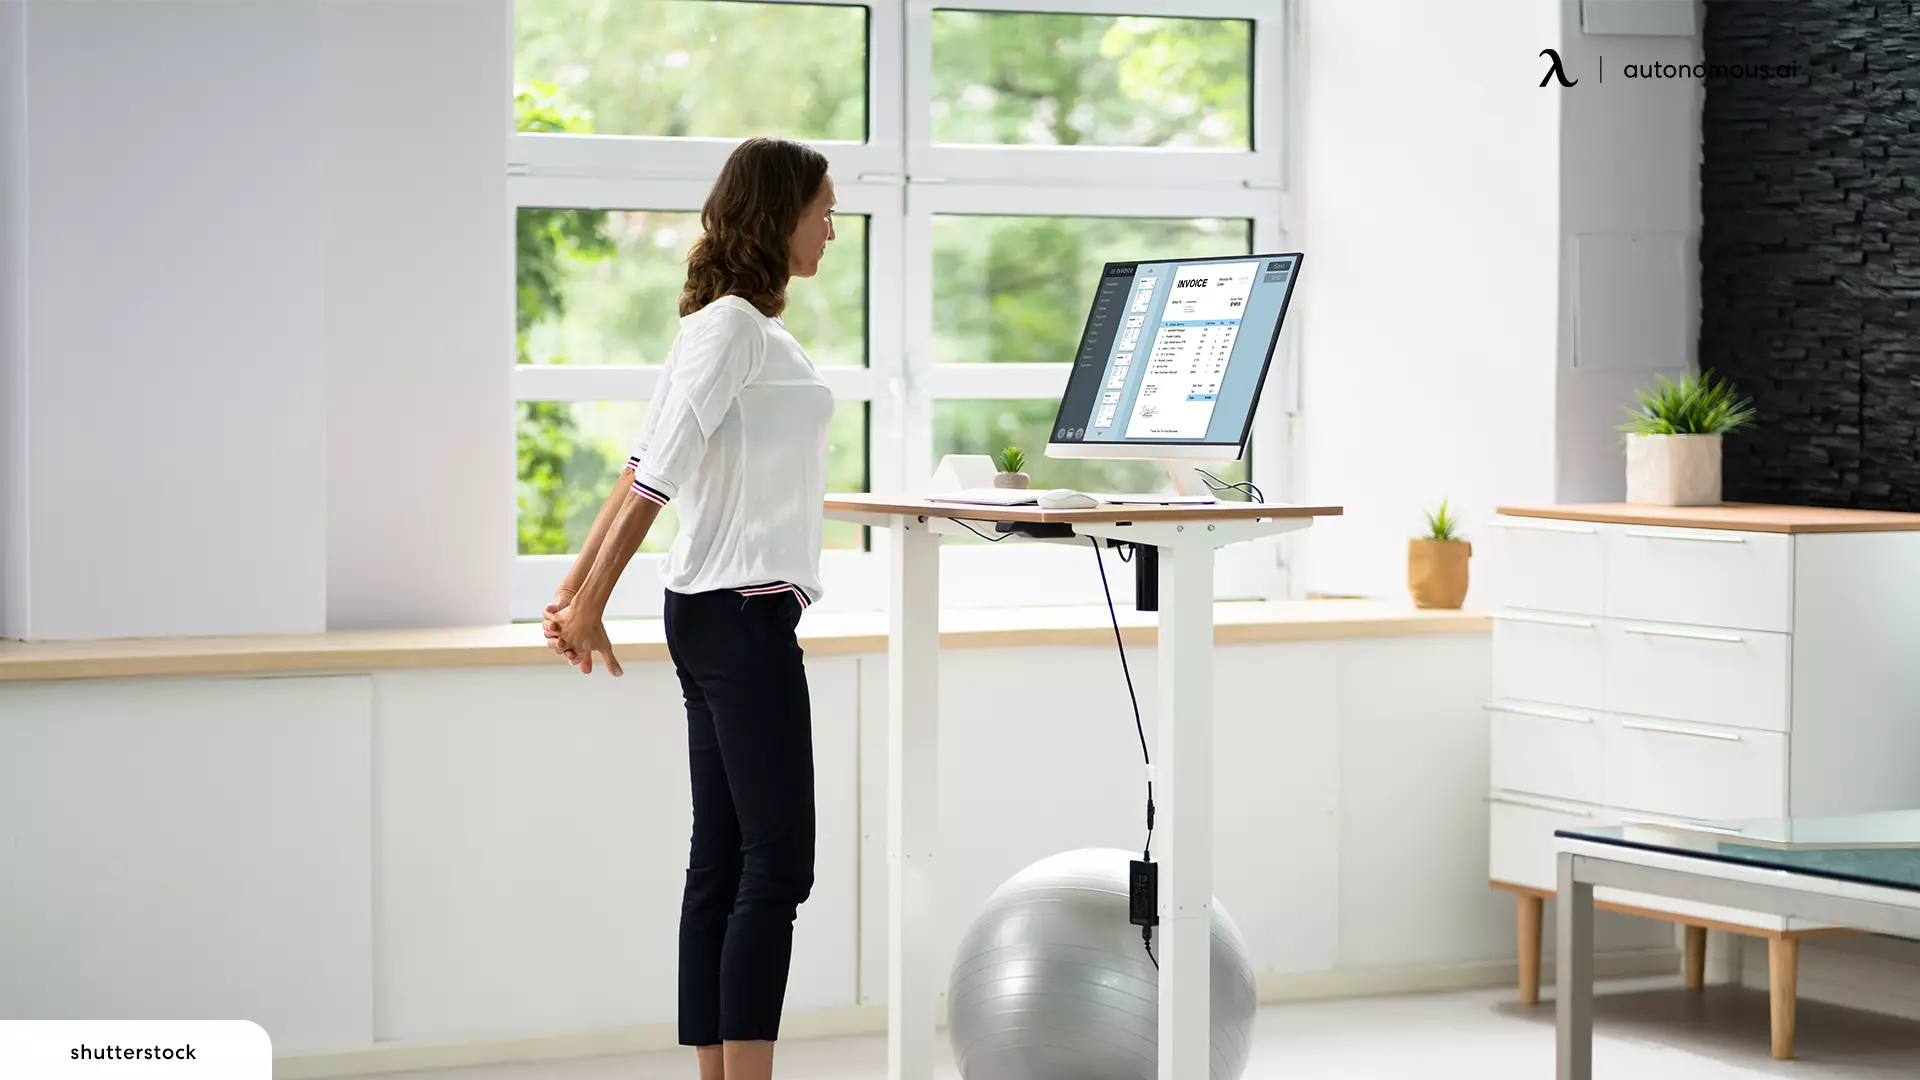 A Walking Desk or a Standing Desk